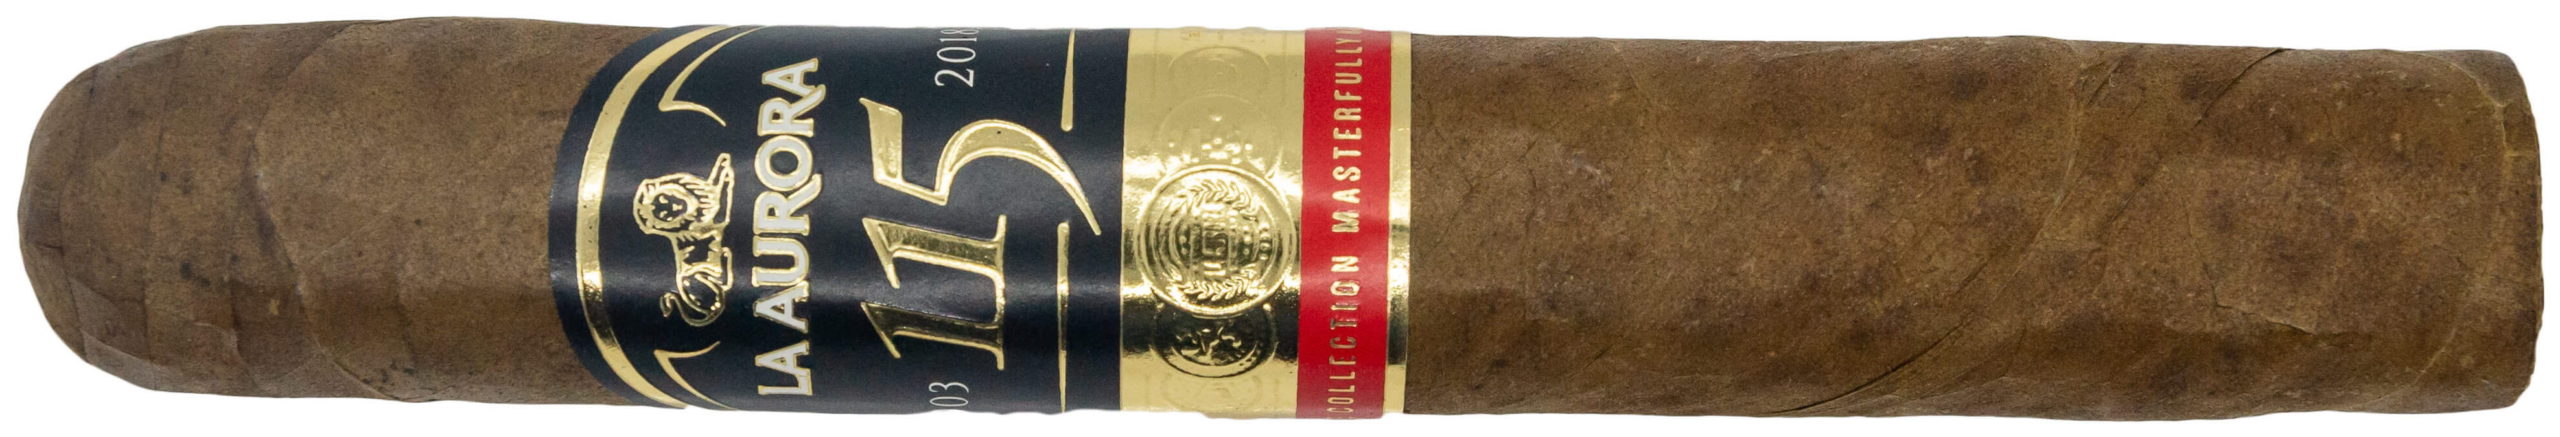 La Aurora 115 Anniversary Robusto cigar sigaro